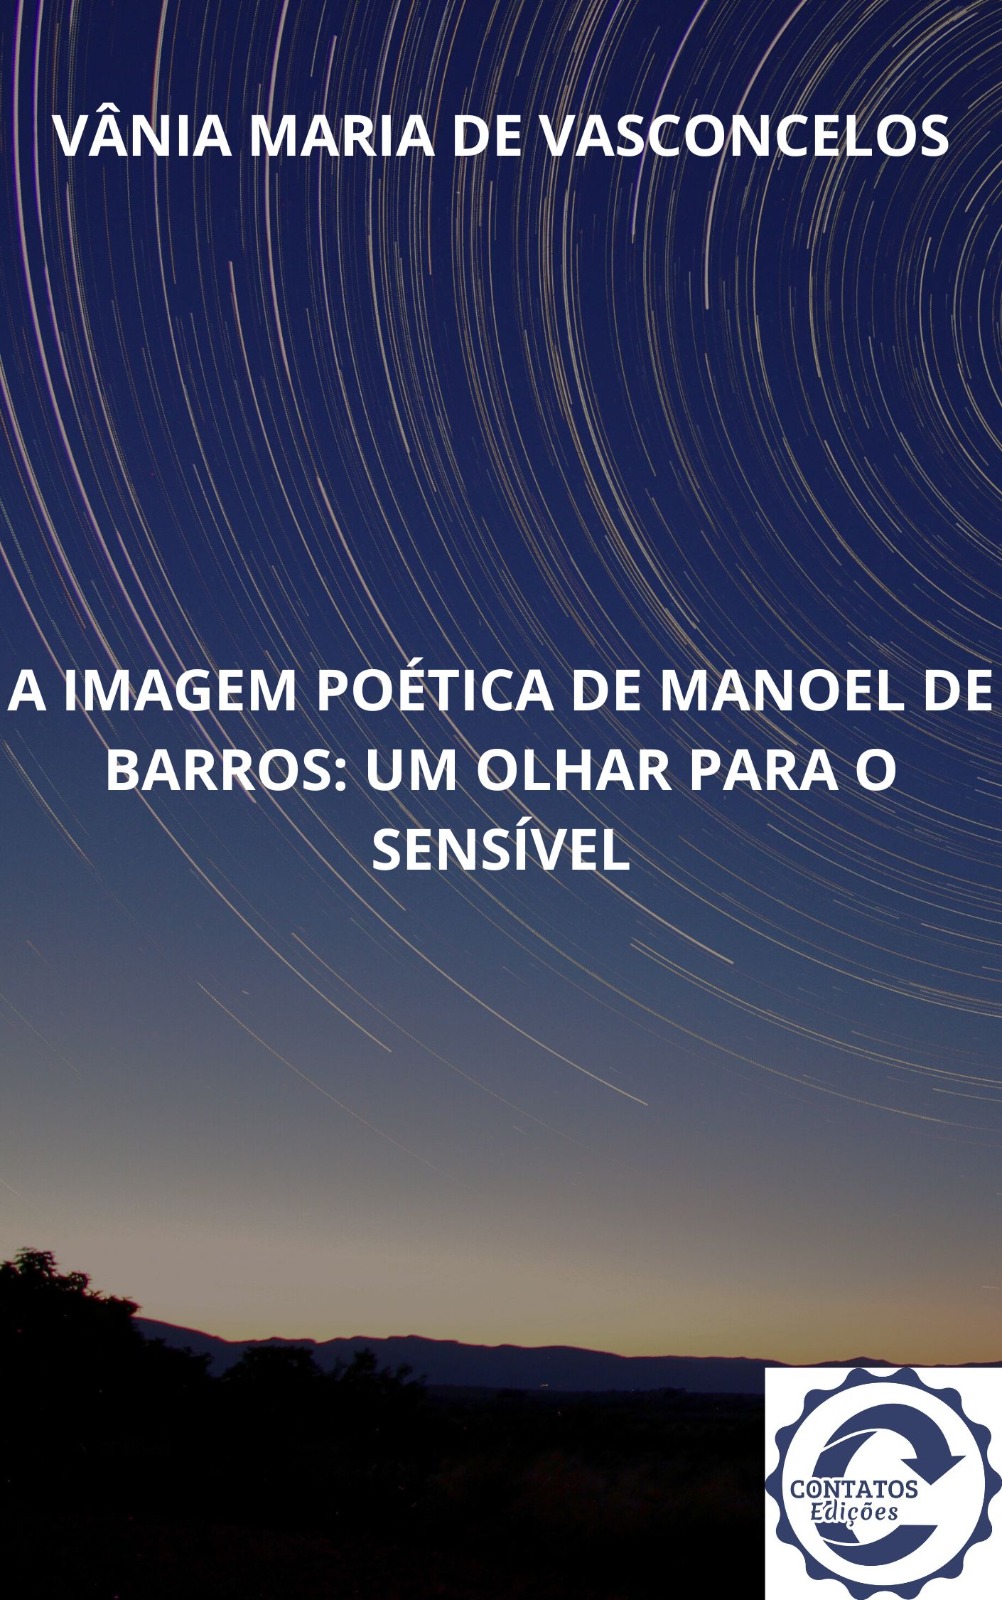 A Imagem Poética de Manoel de Barros